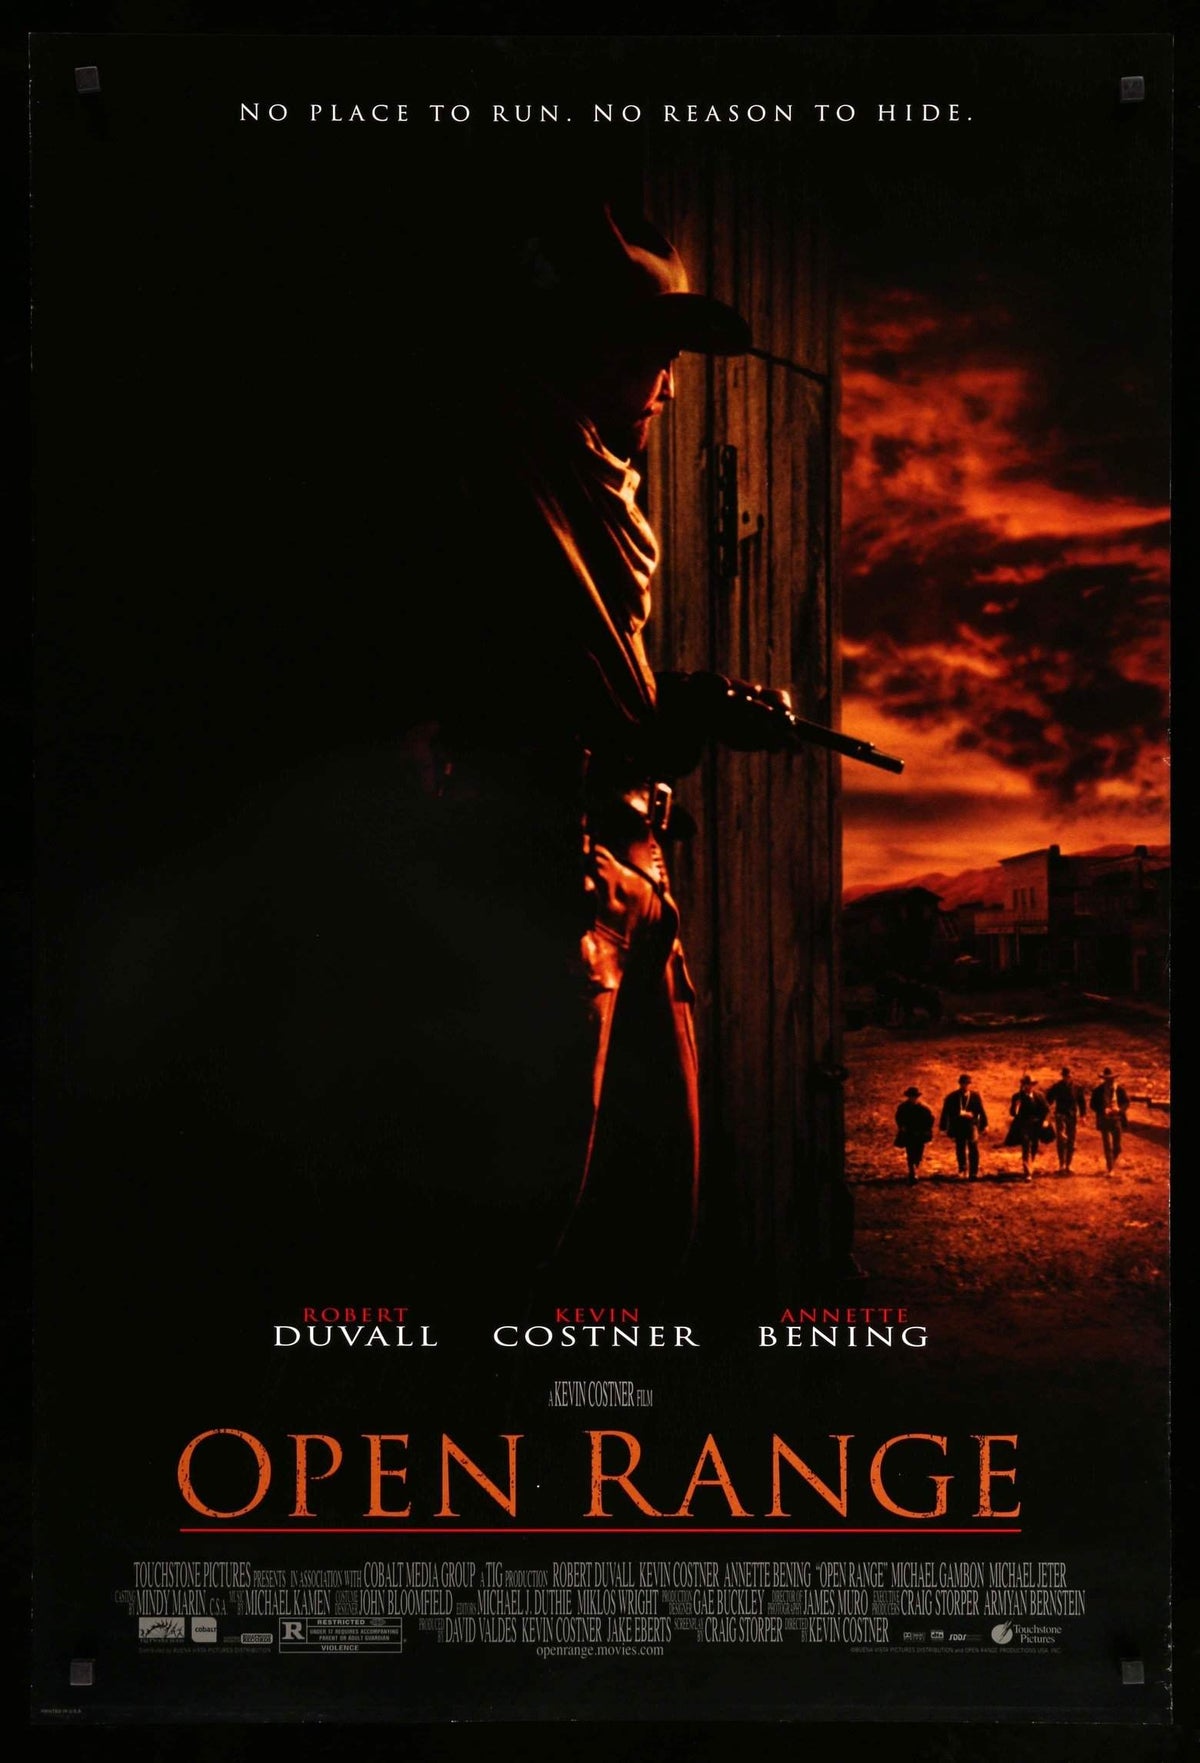 Open Range (2003) original movie poster for sale at Original Film Art